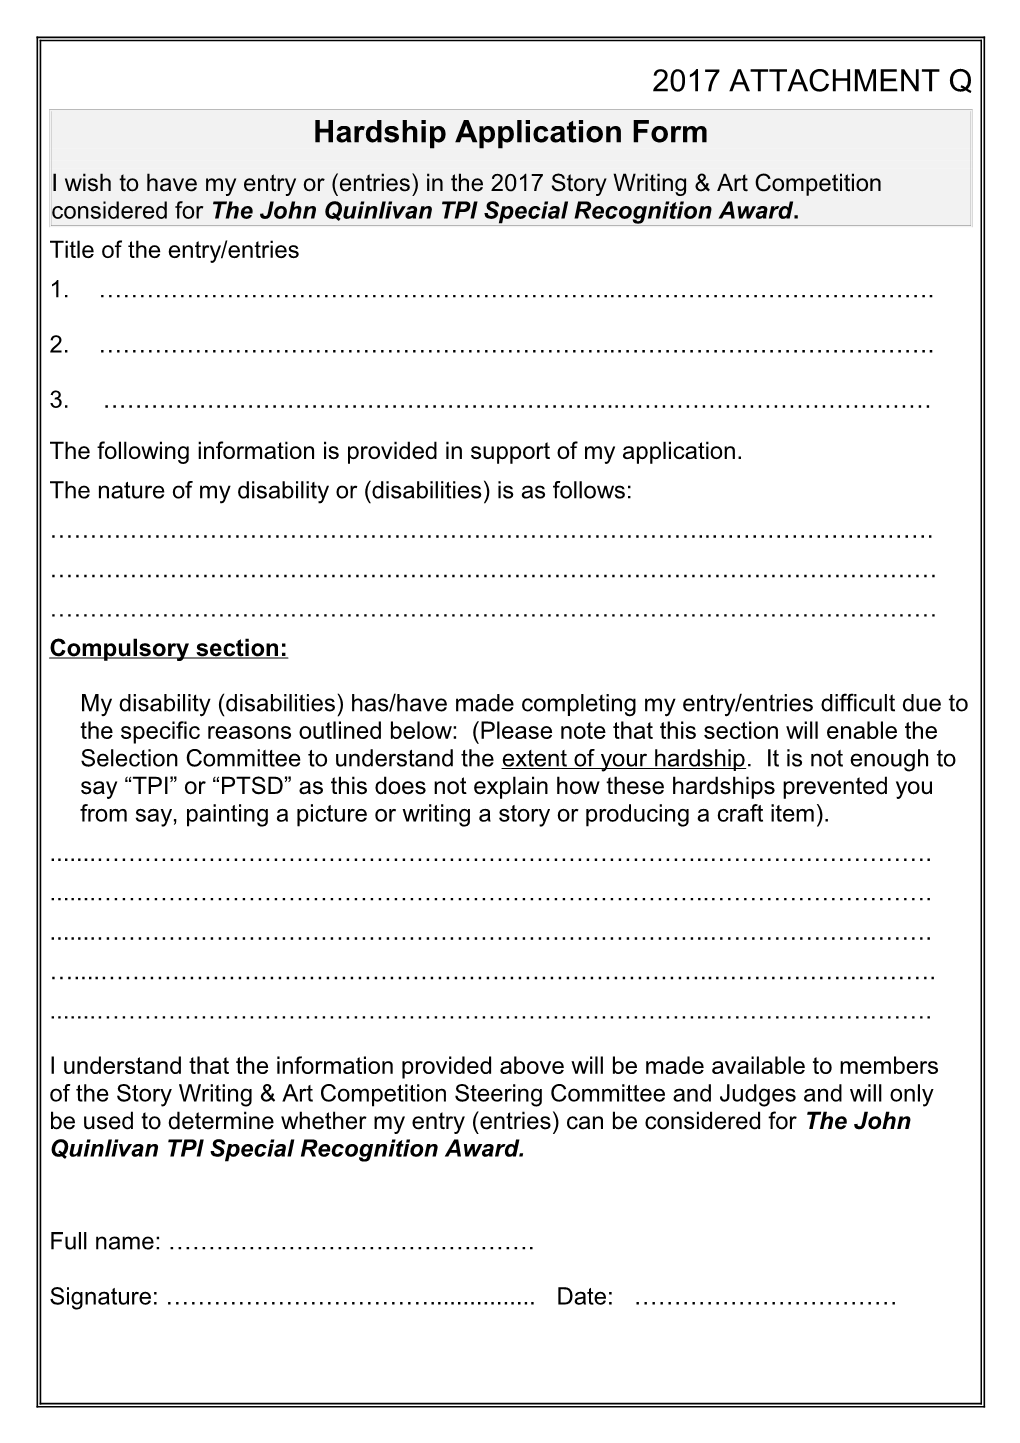 Hardship Application Form